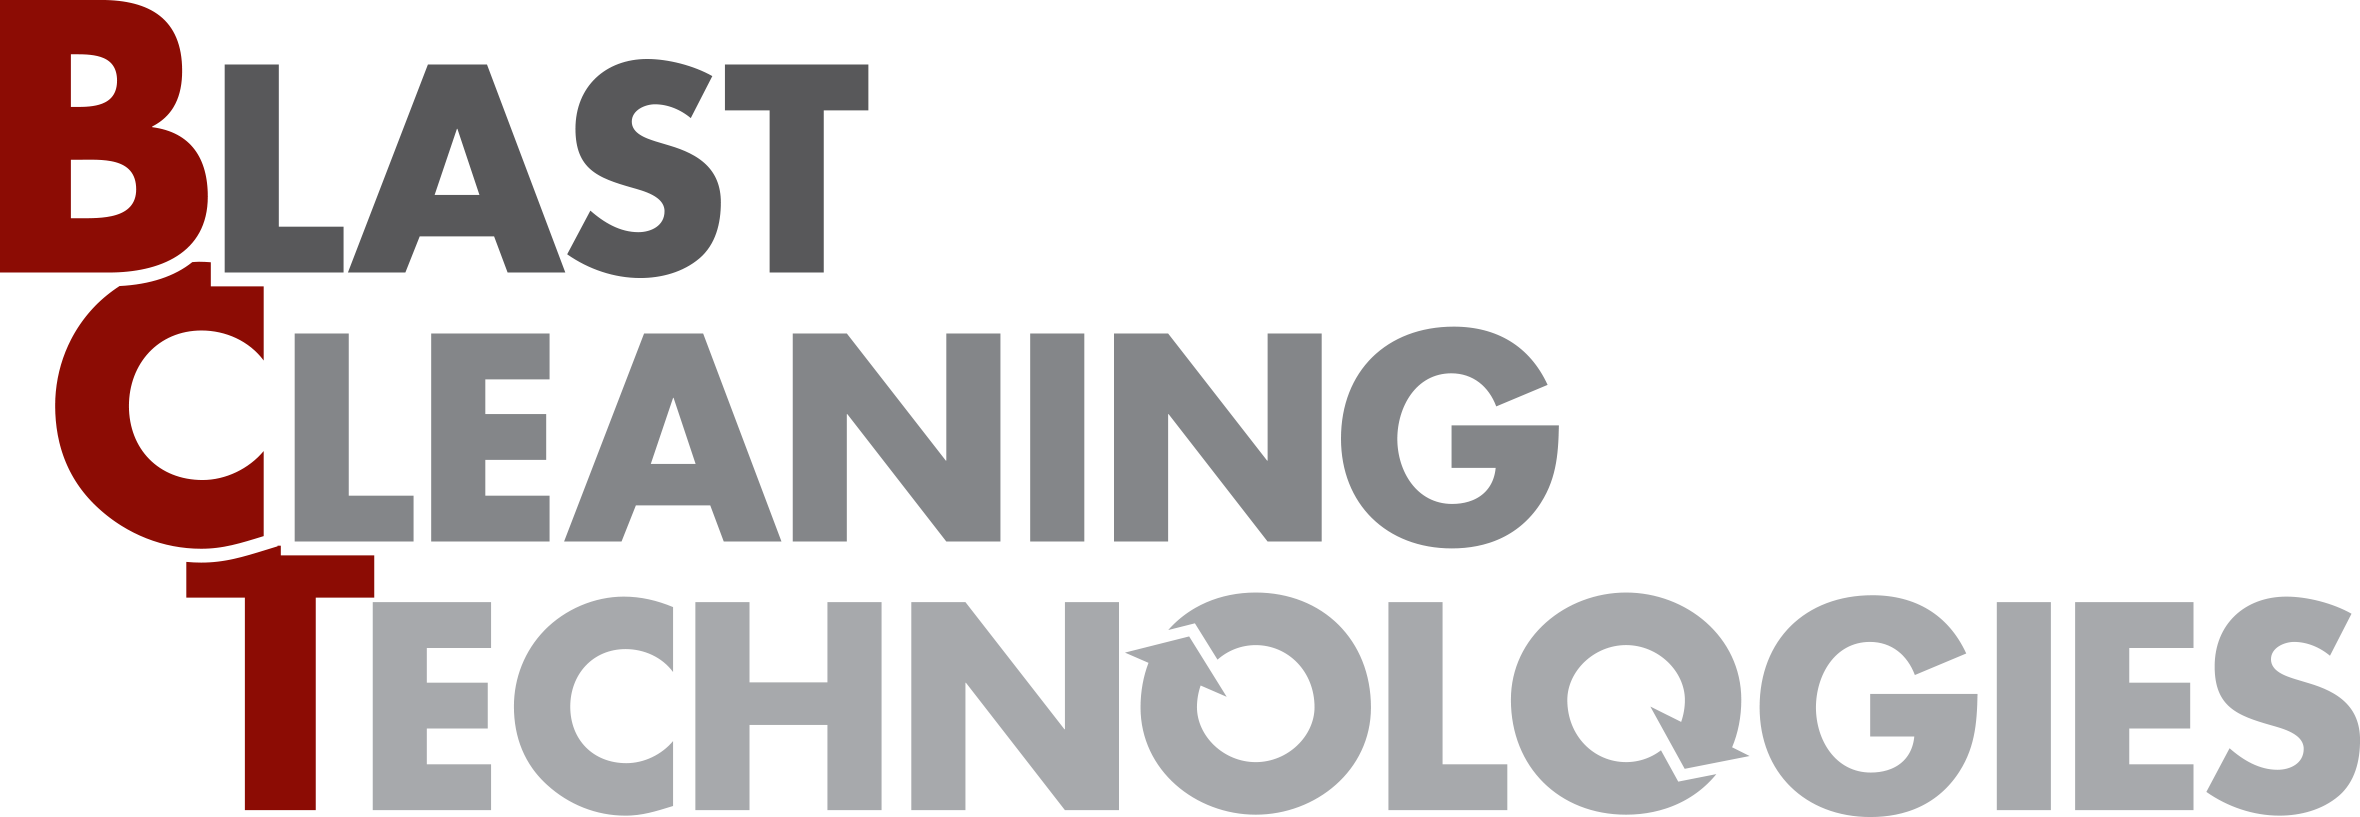 Blast Cleaning Technologies Company Logo